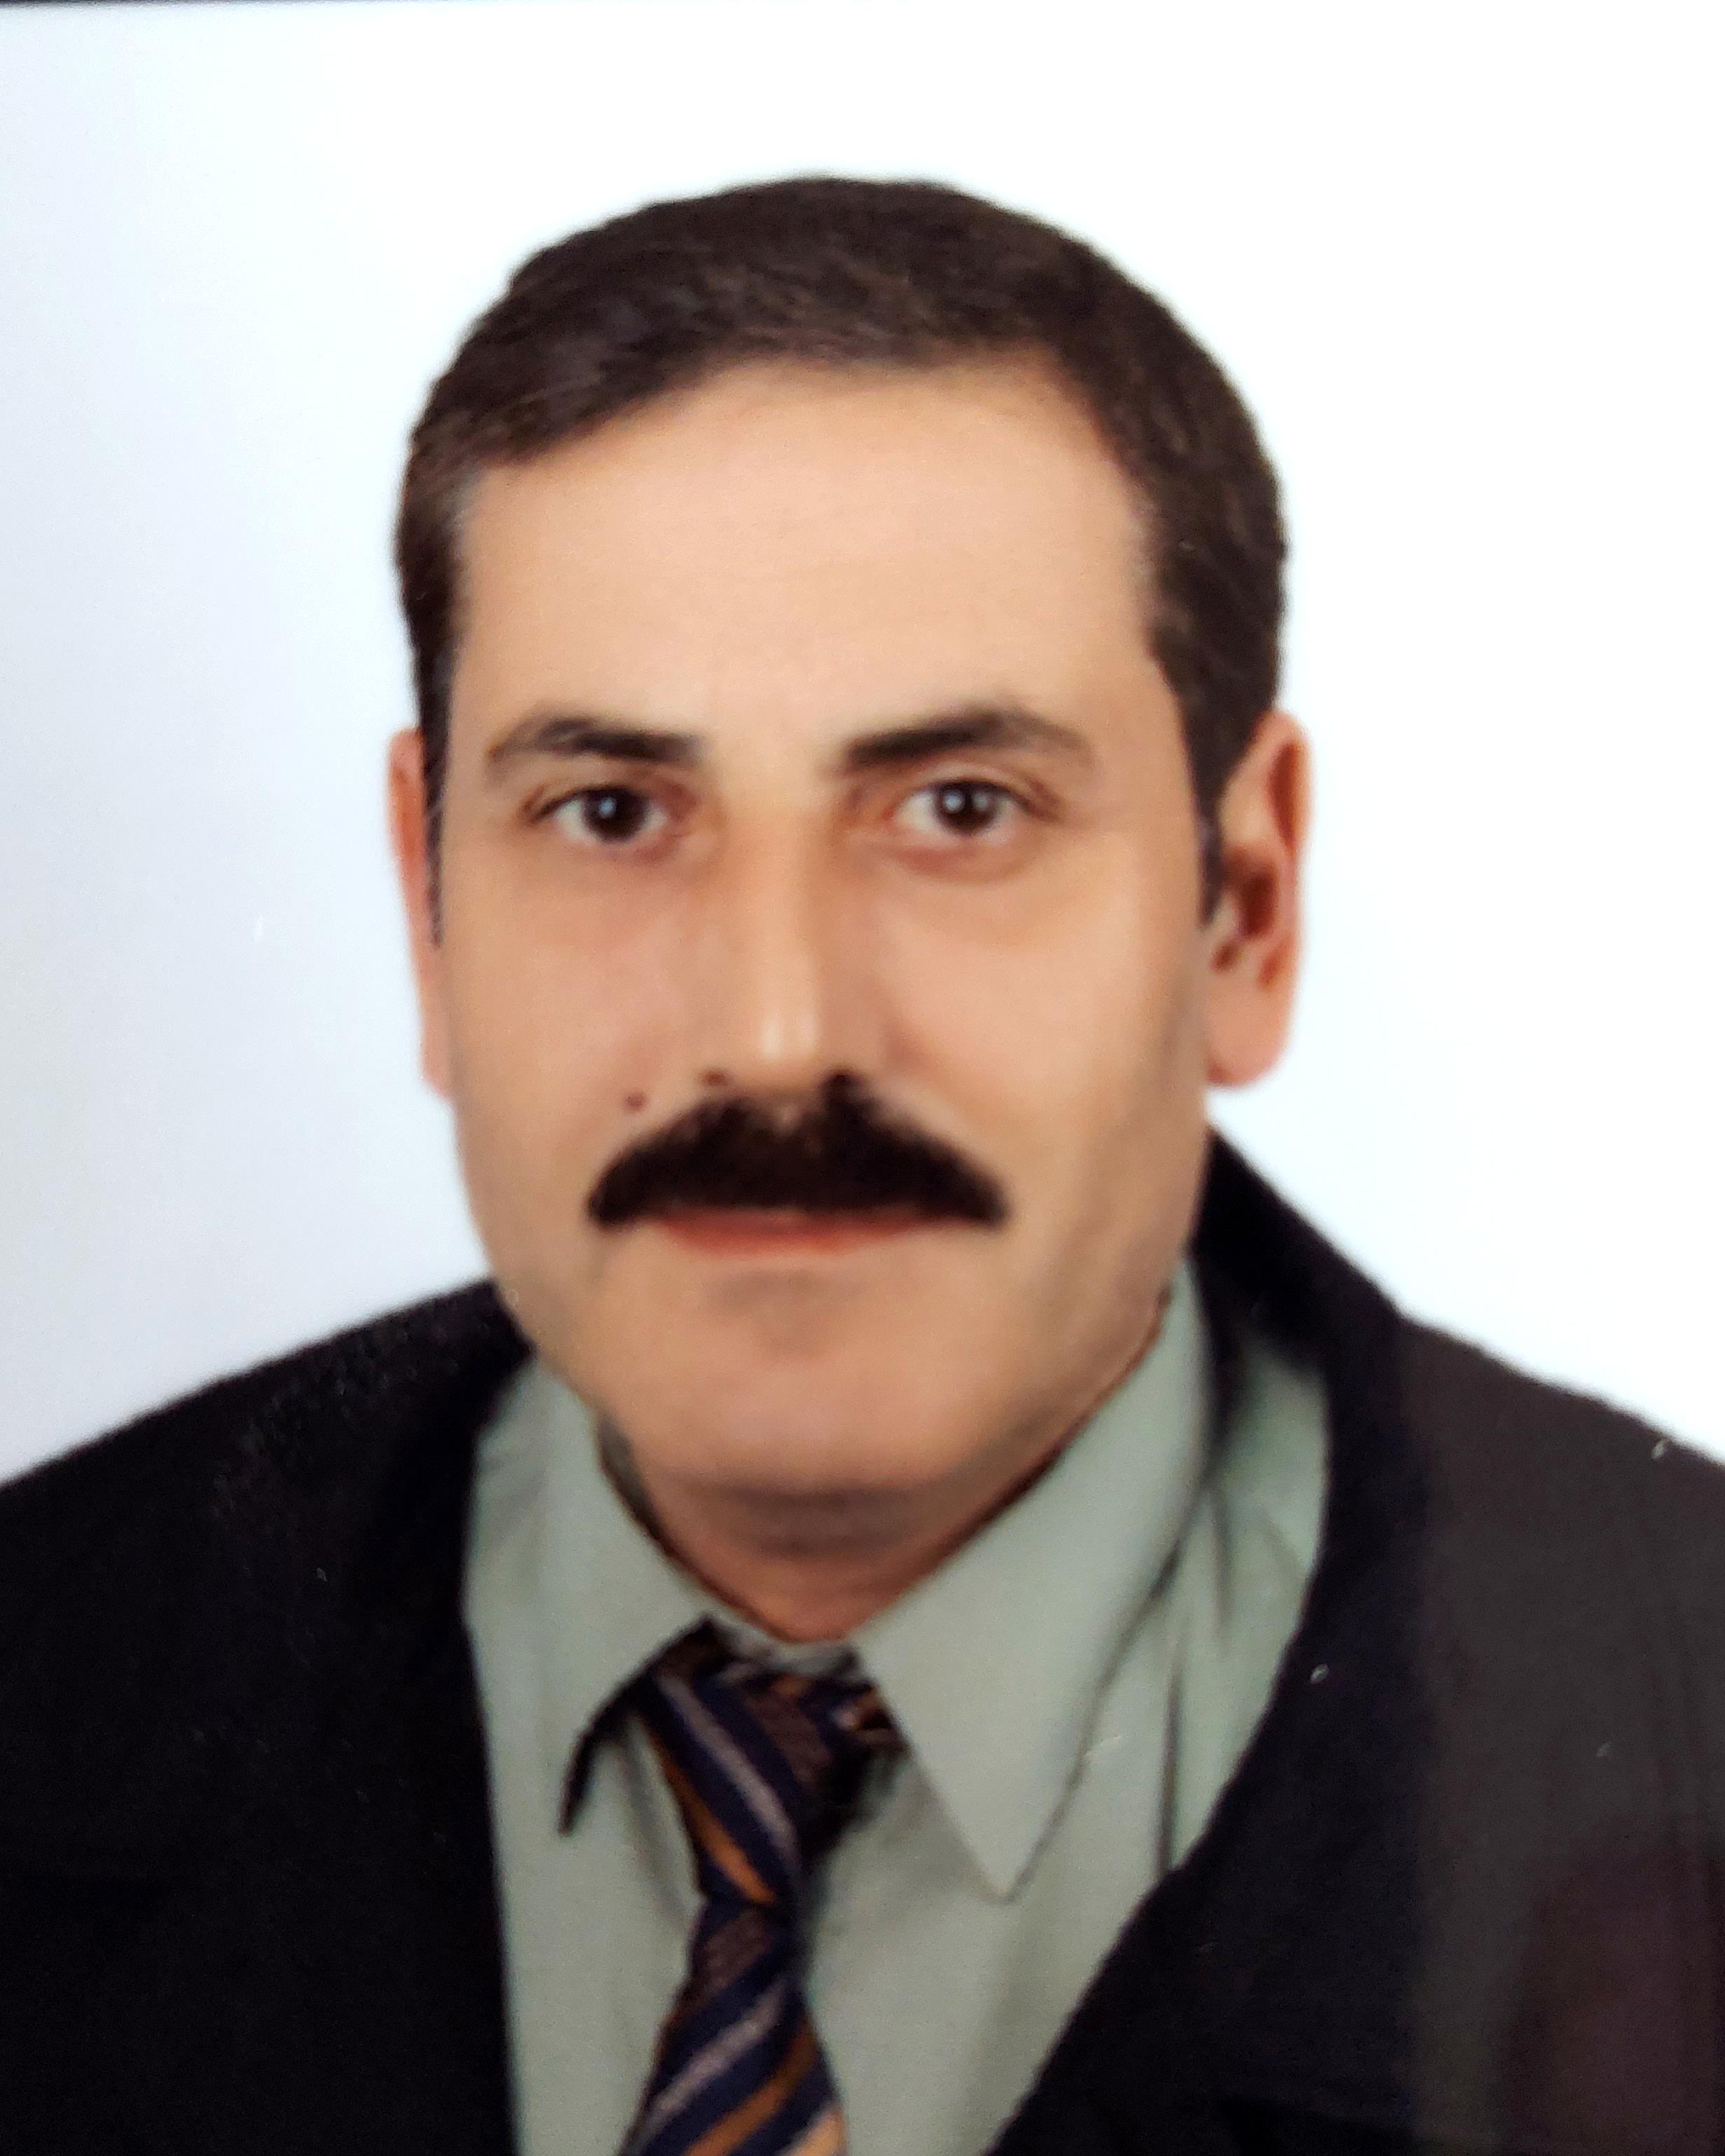 Osman Kurtuluş